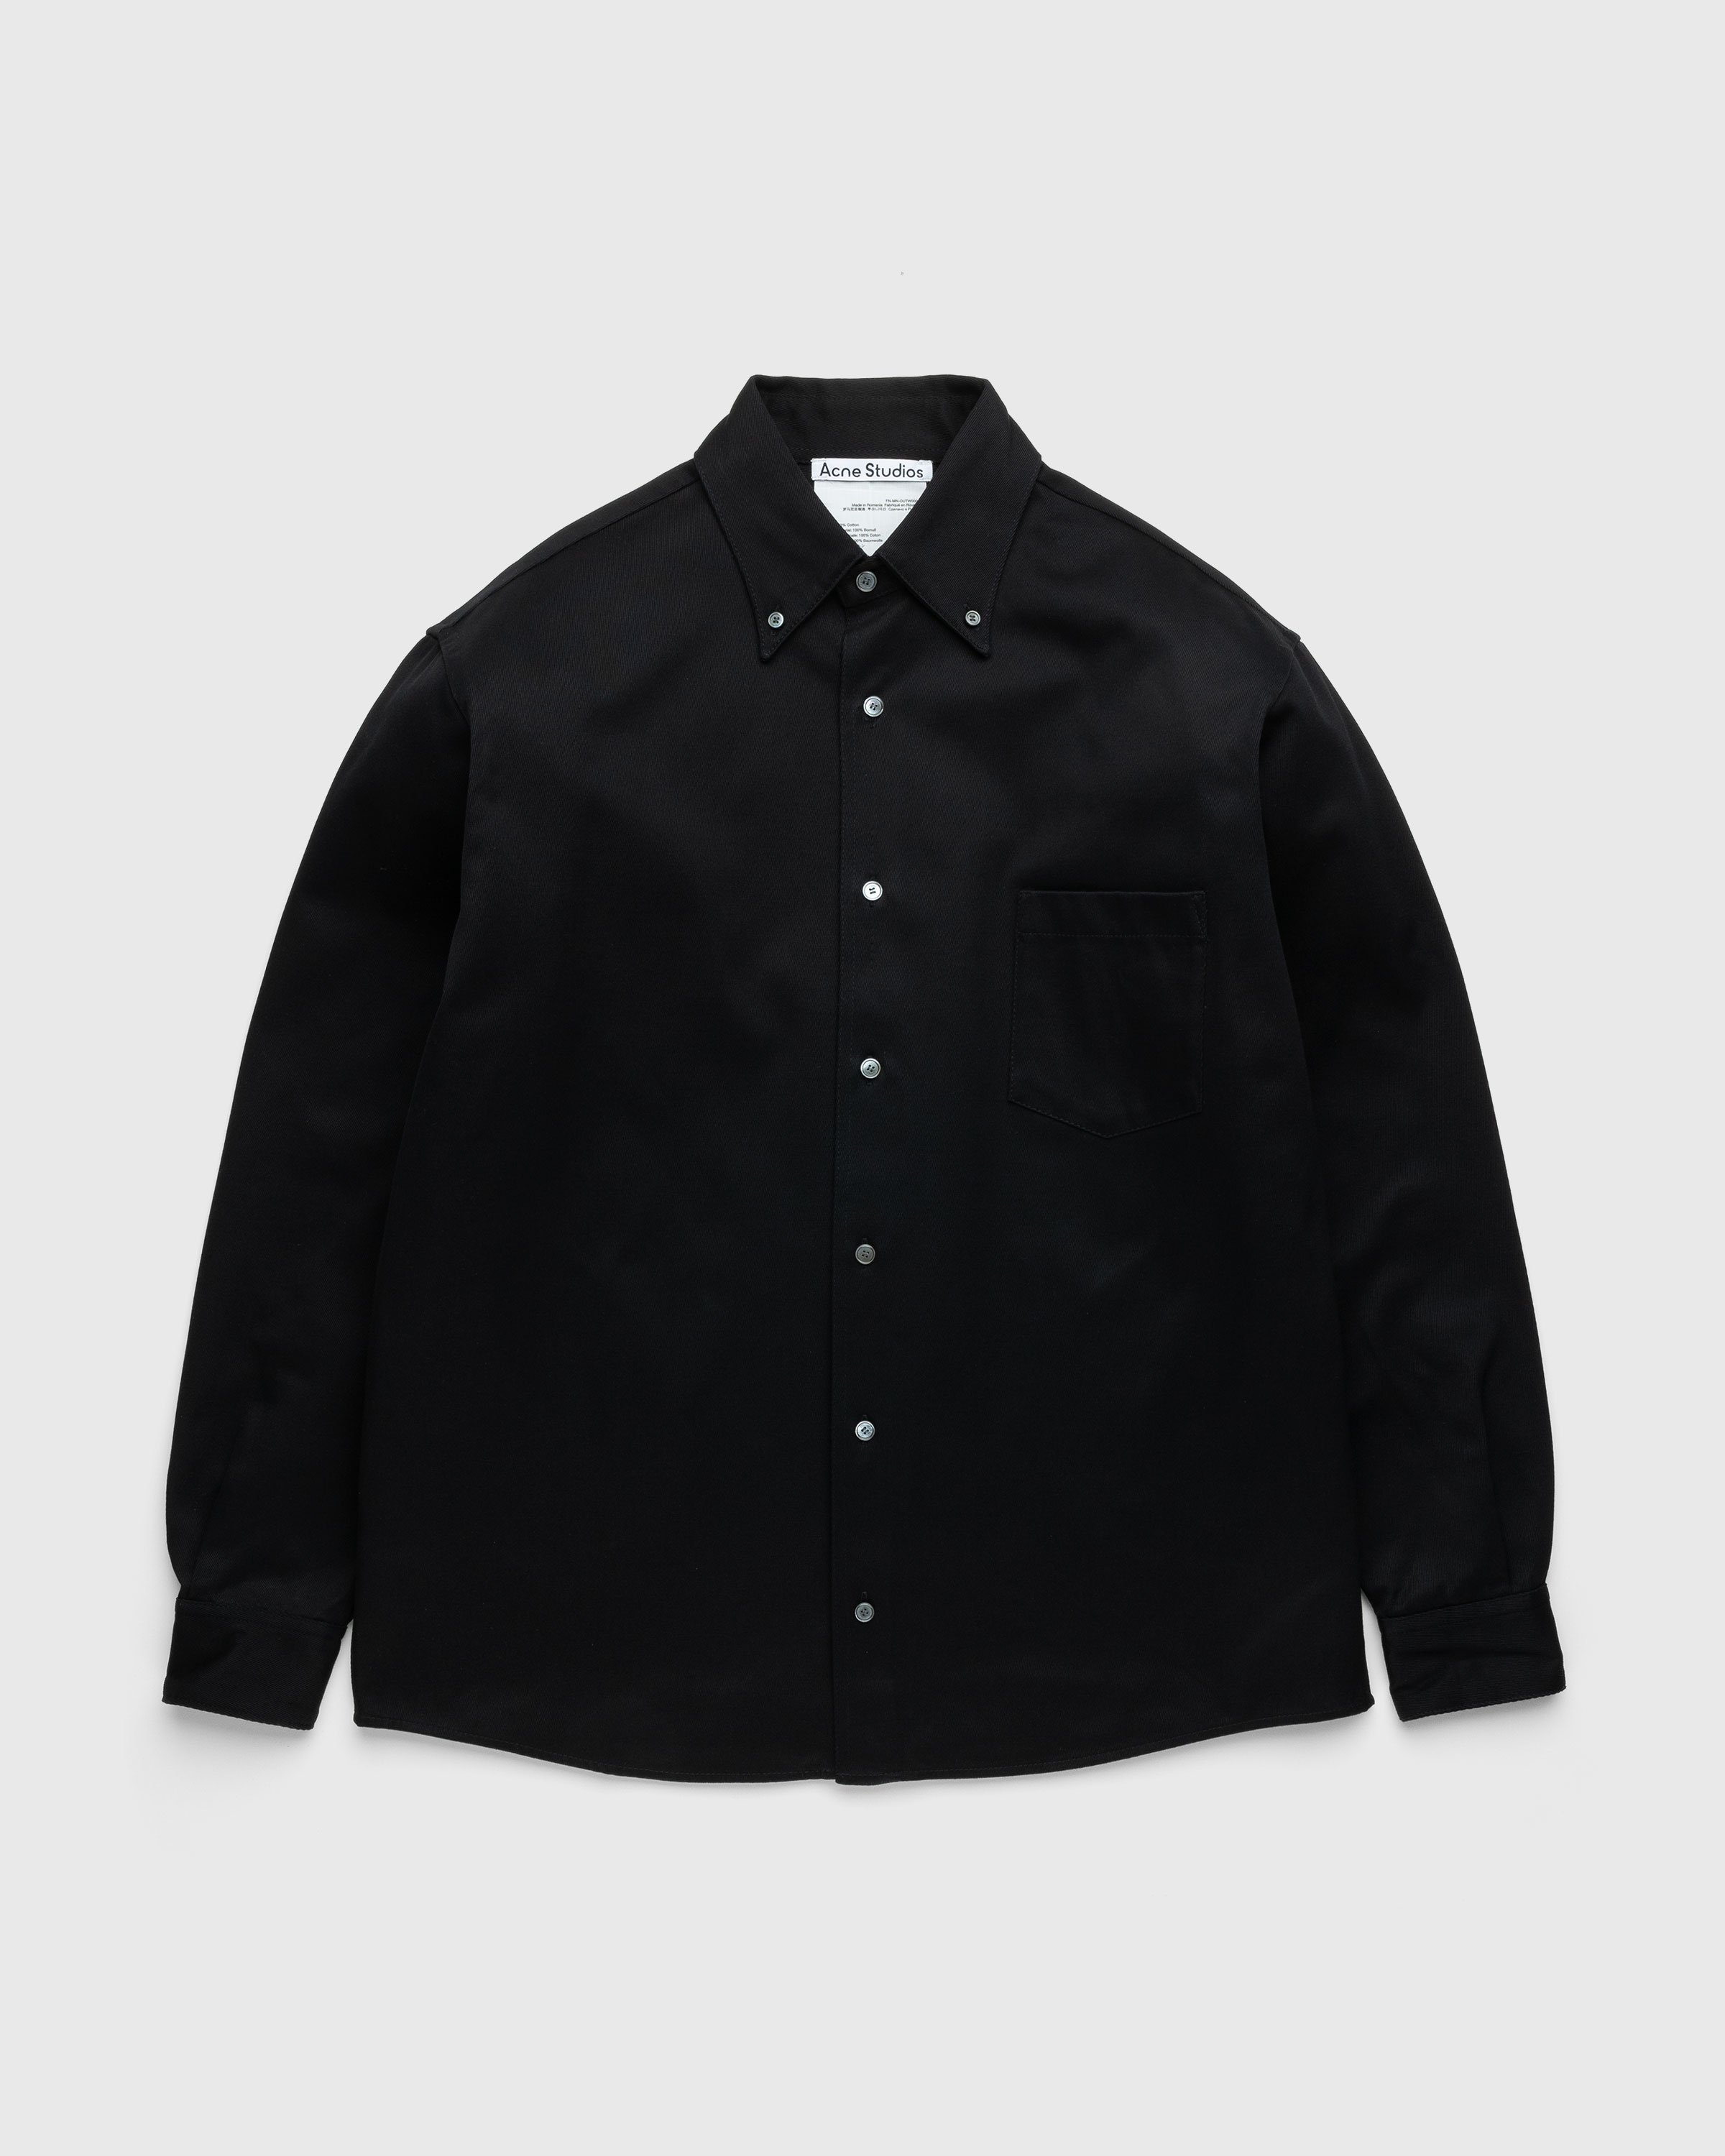 Acne Studios - Button-Up Overshirt Black - Clothing - Black - Image 1